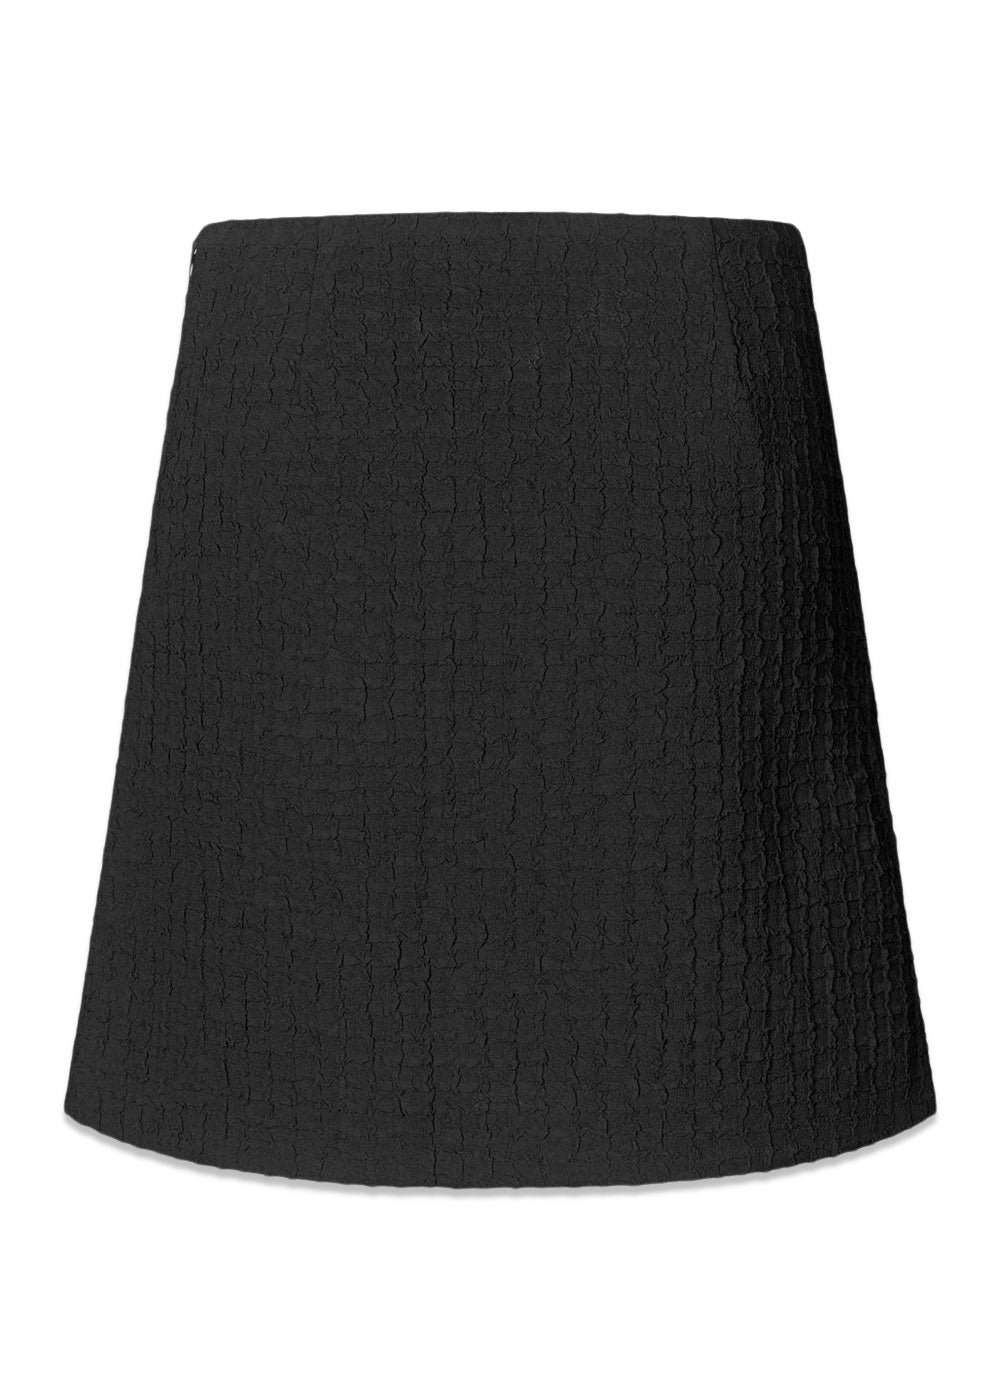 FaiMD skirt - Black